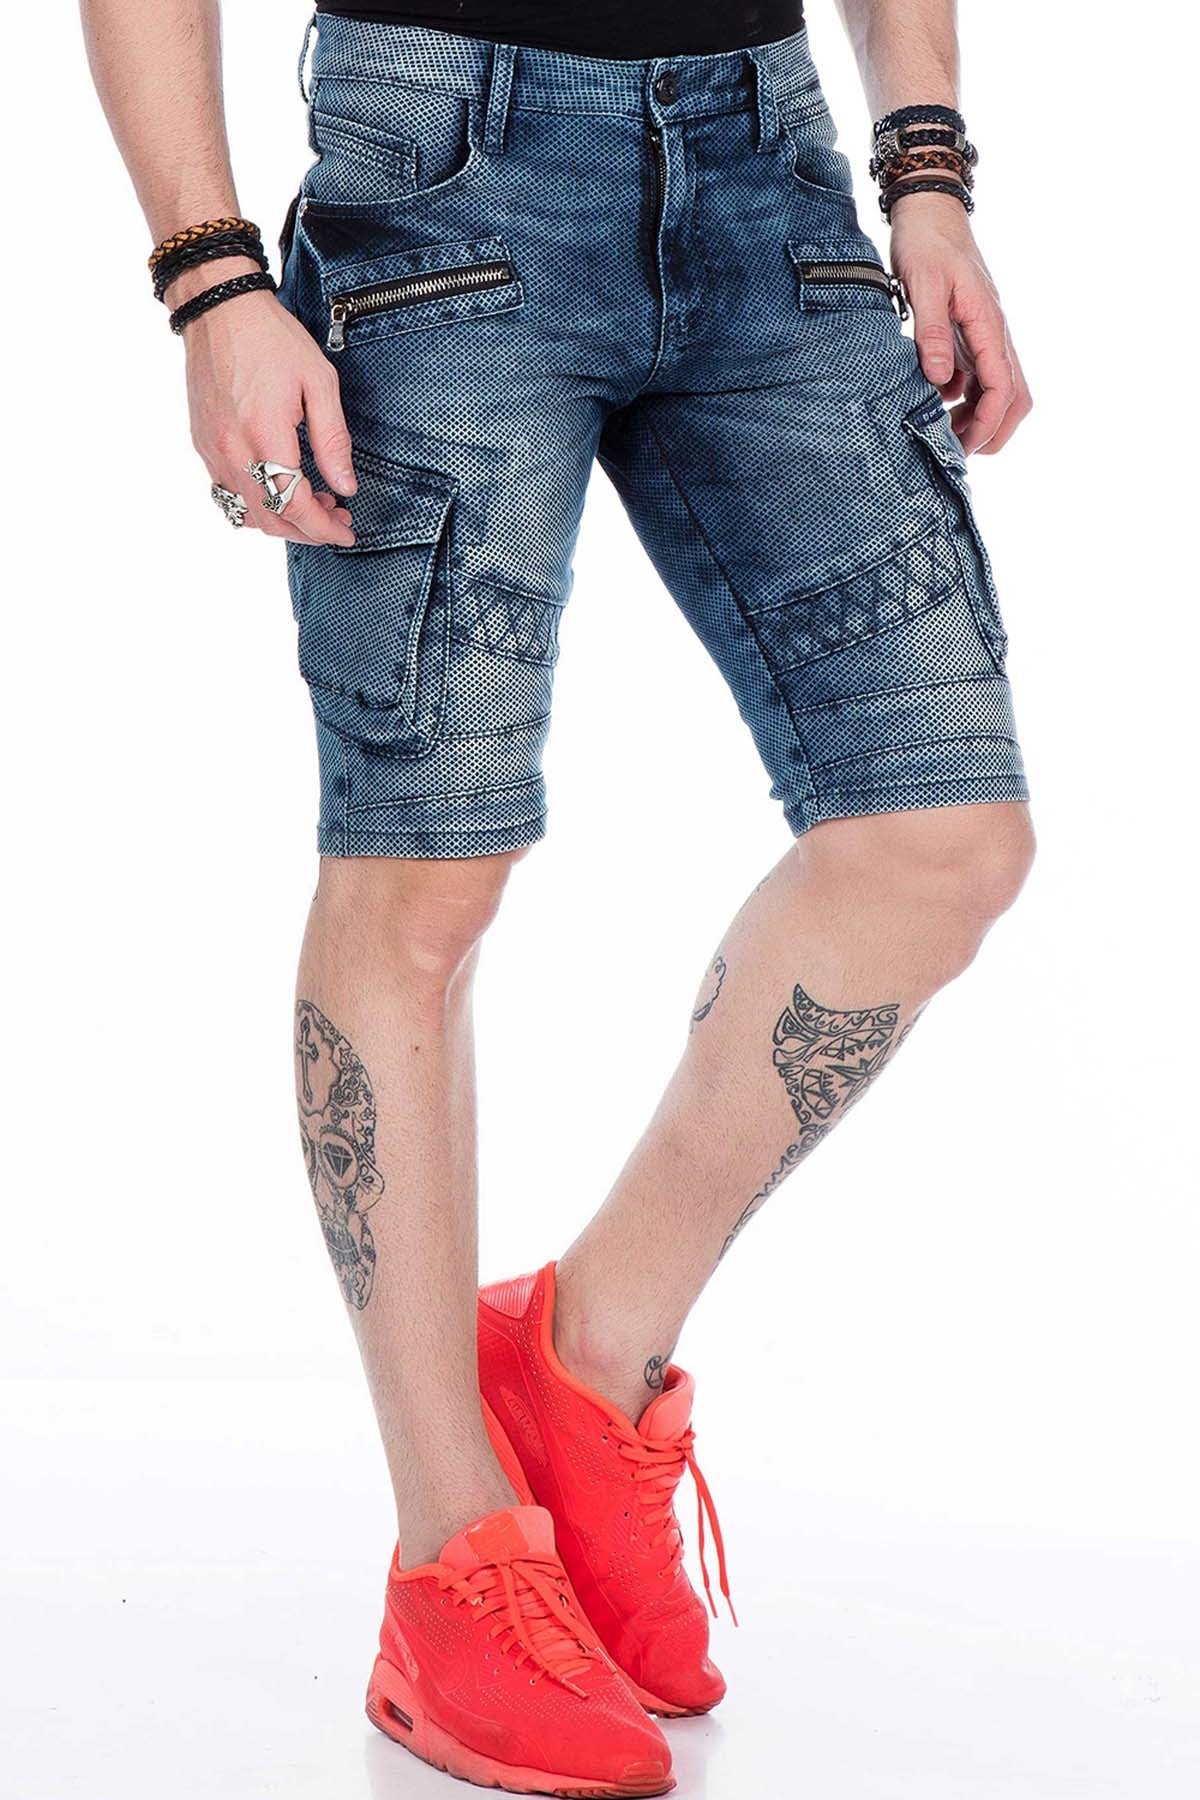 Cipo &amp; Baxx COVE Men's Short Jeans Denim CK178